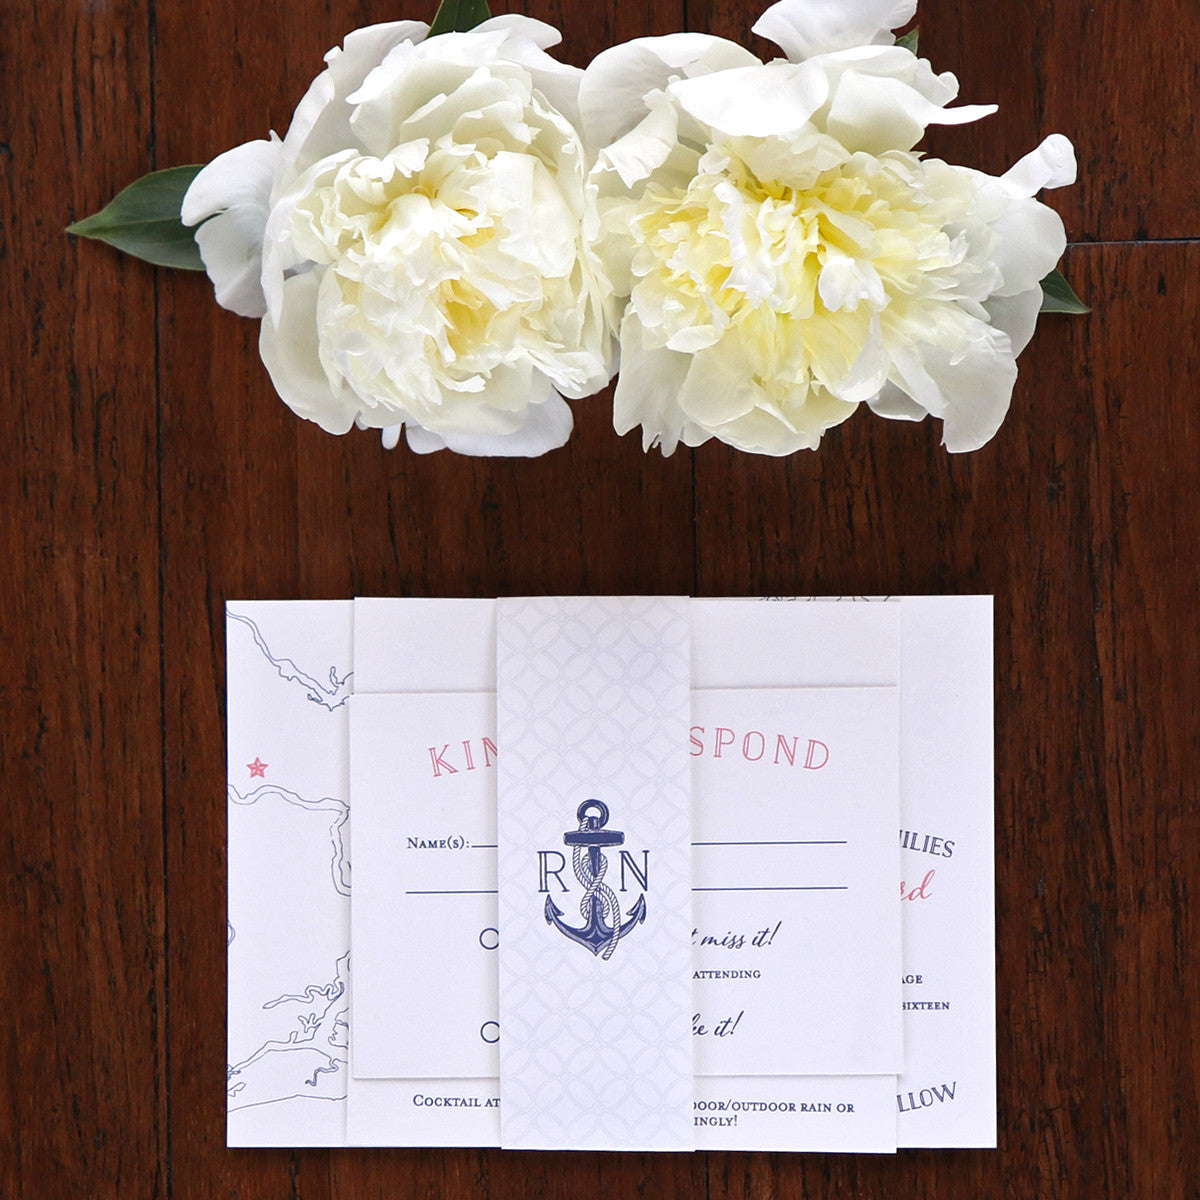 Charleston Outline Map Wedding Invitation by Scotti Cline Designs